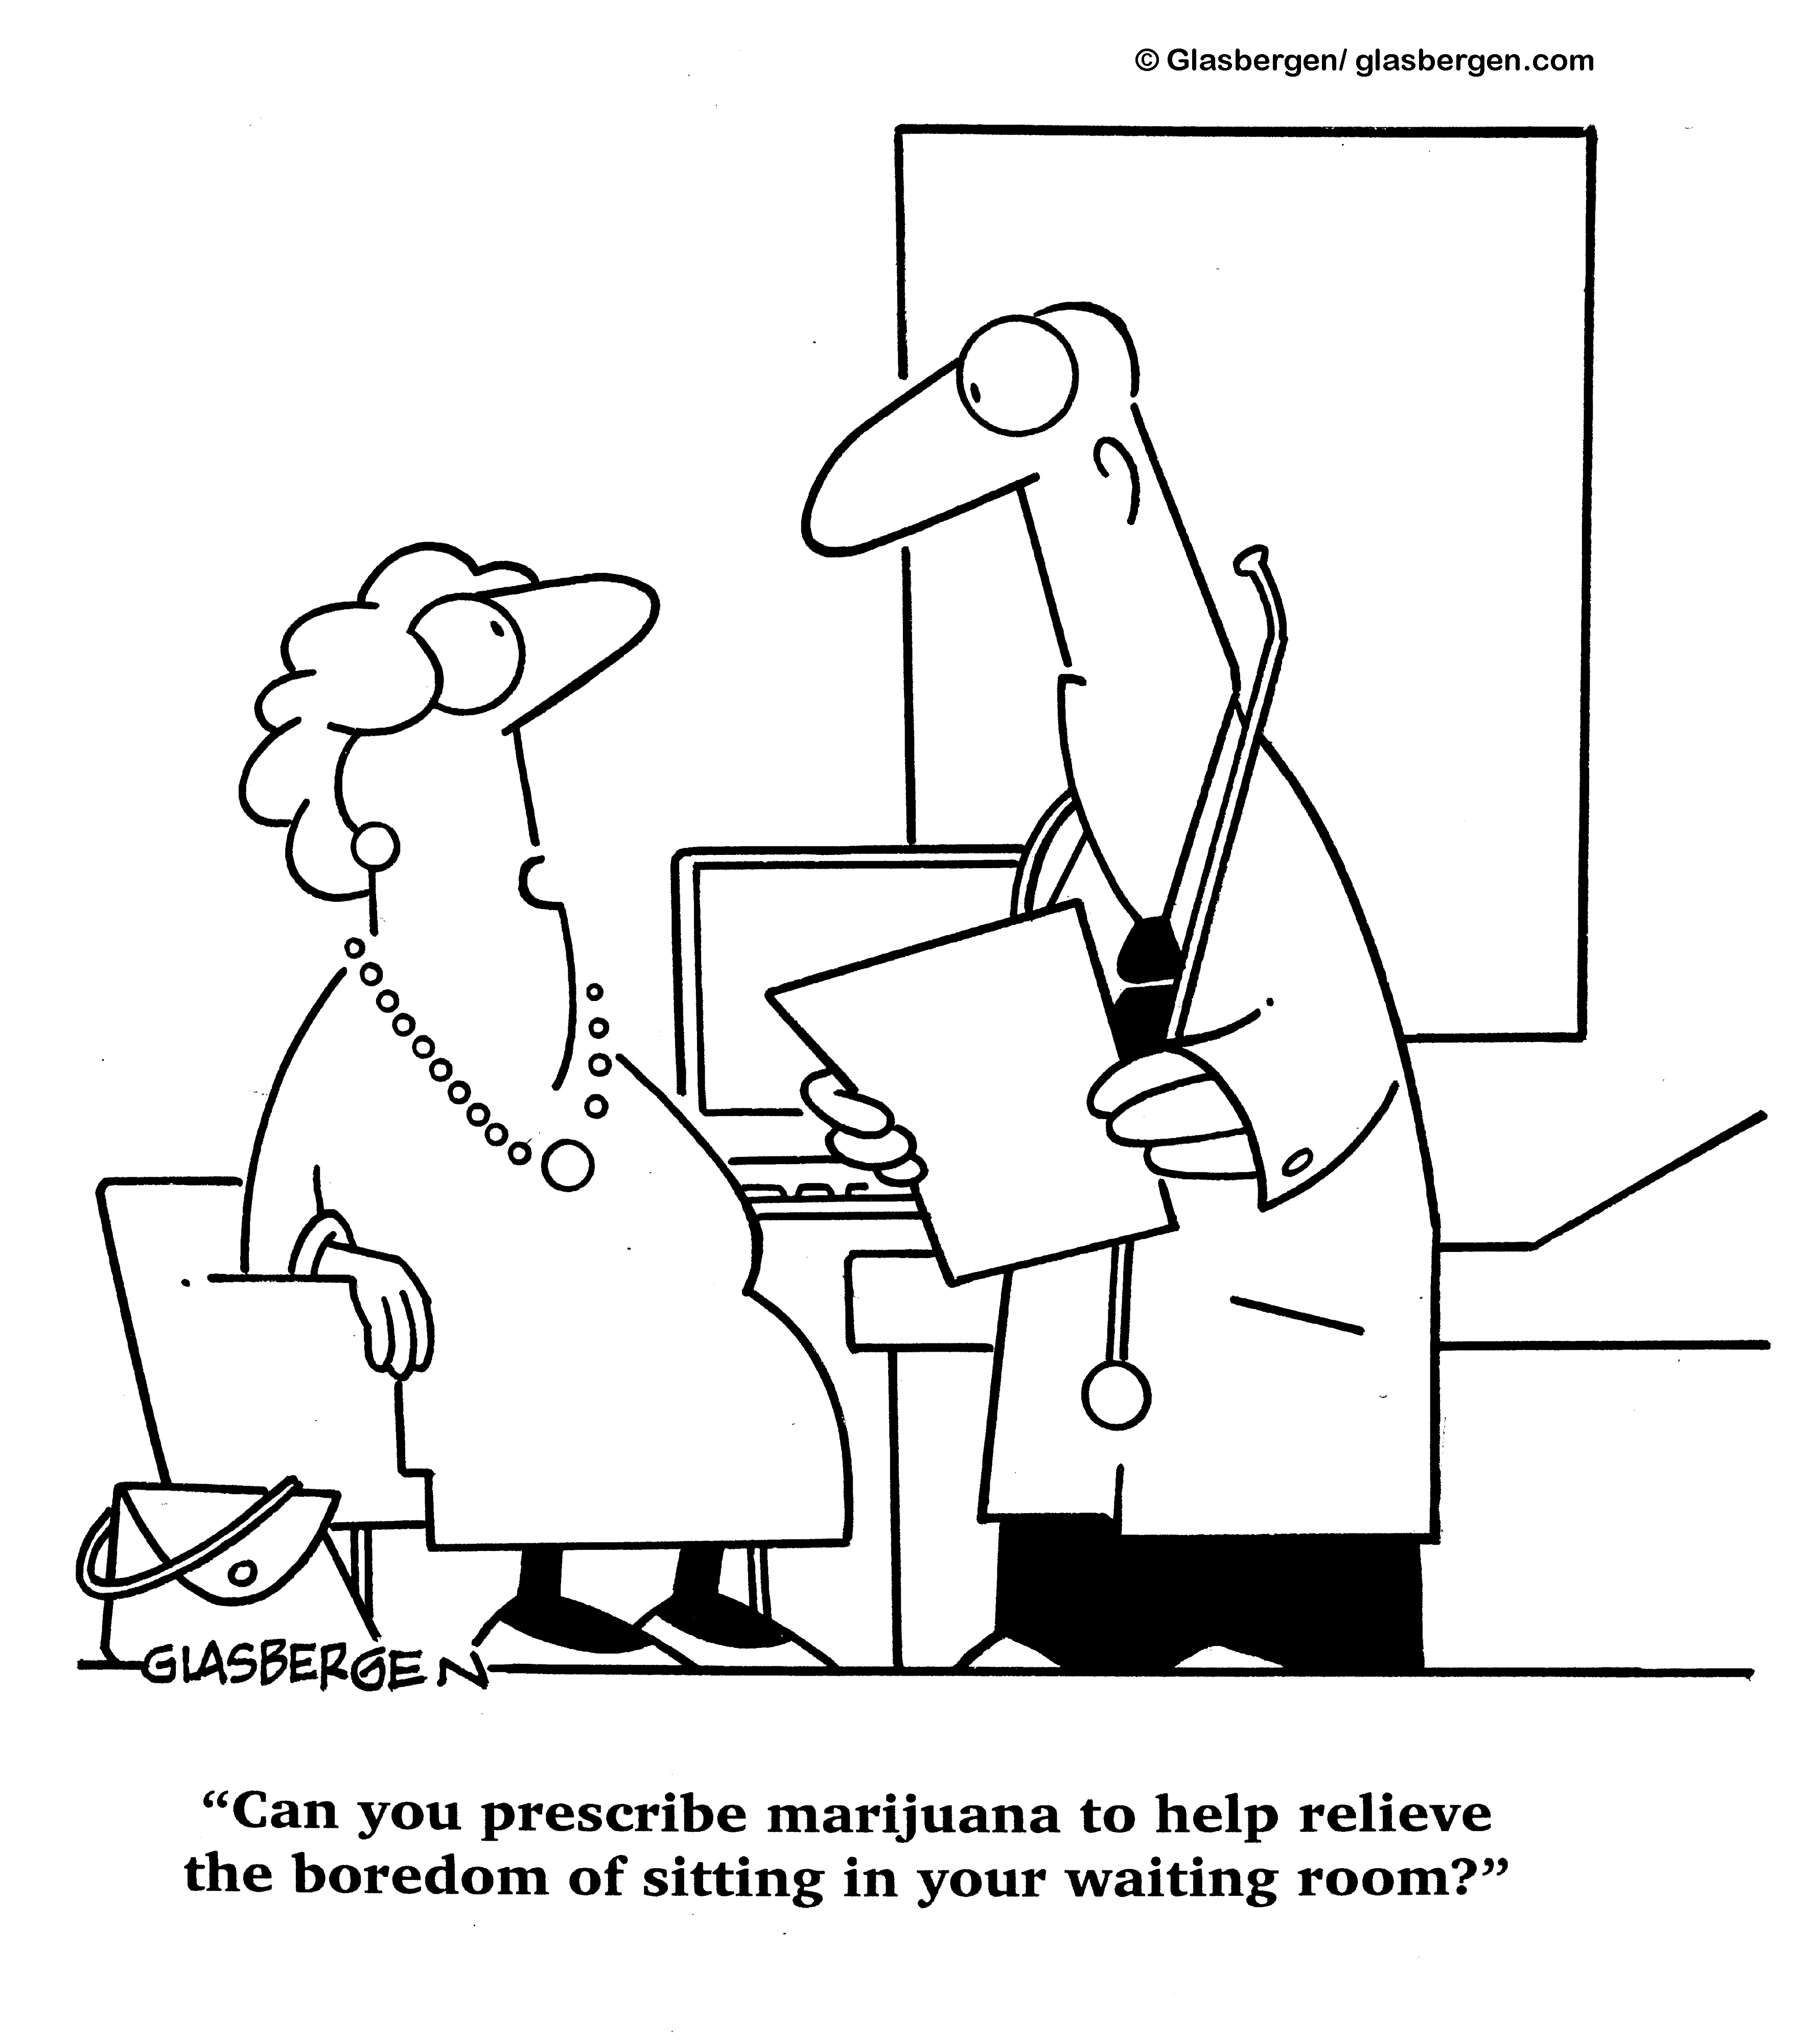 Prescribing Marijuana